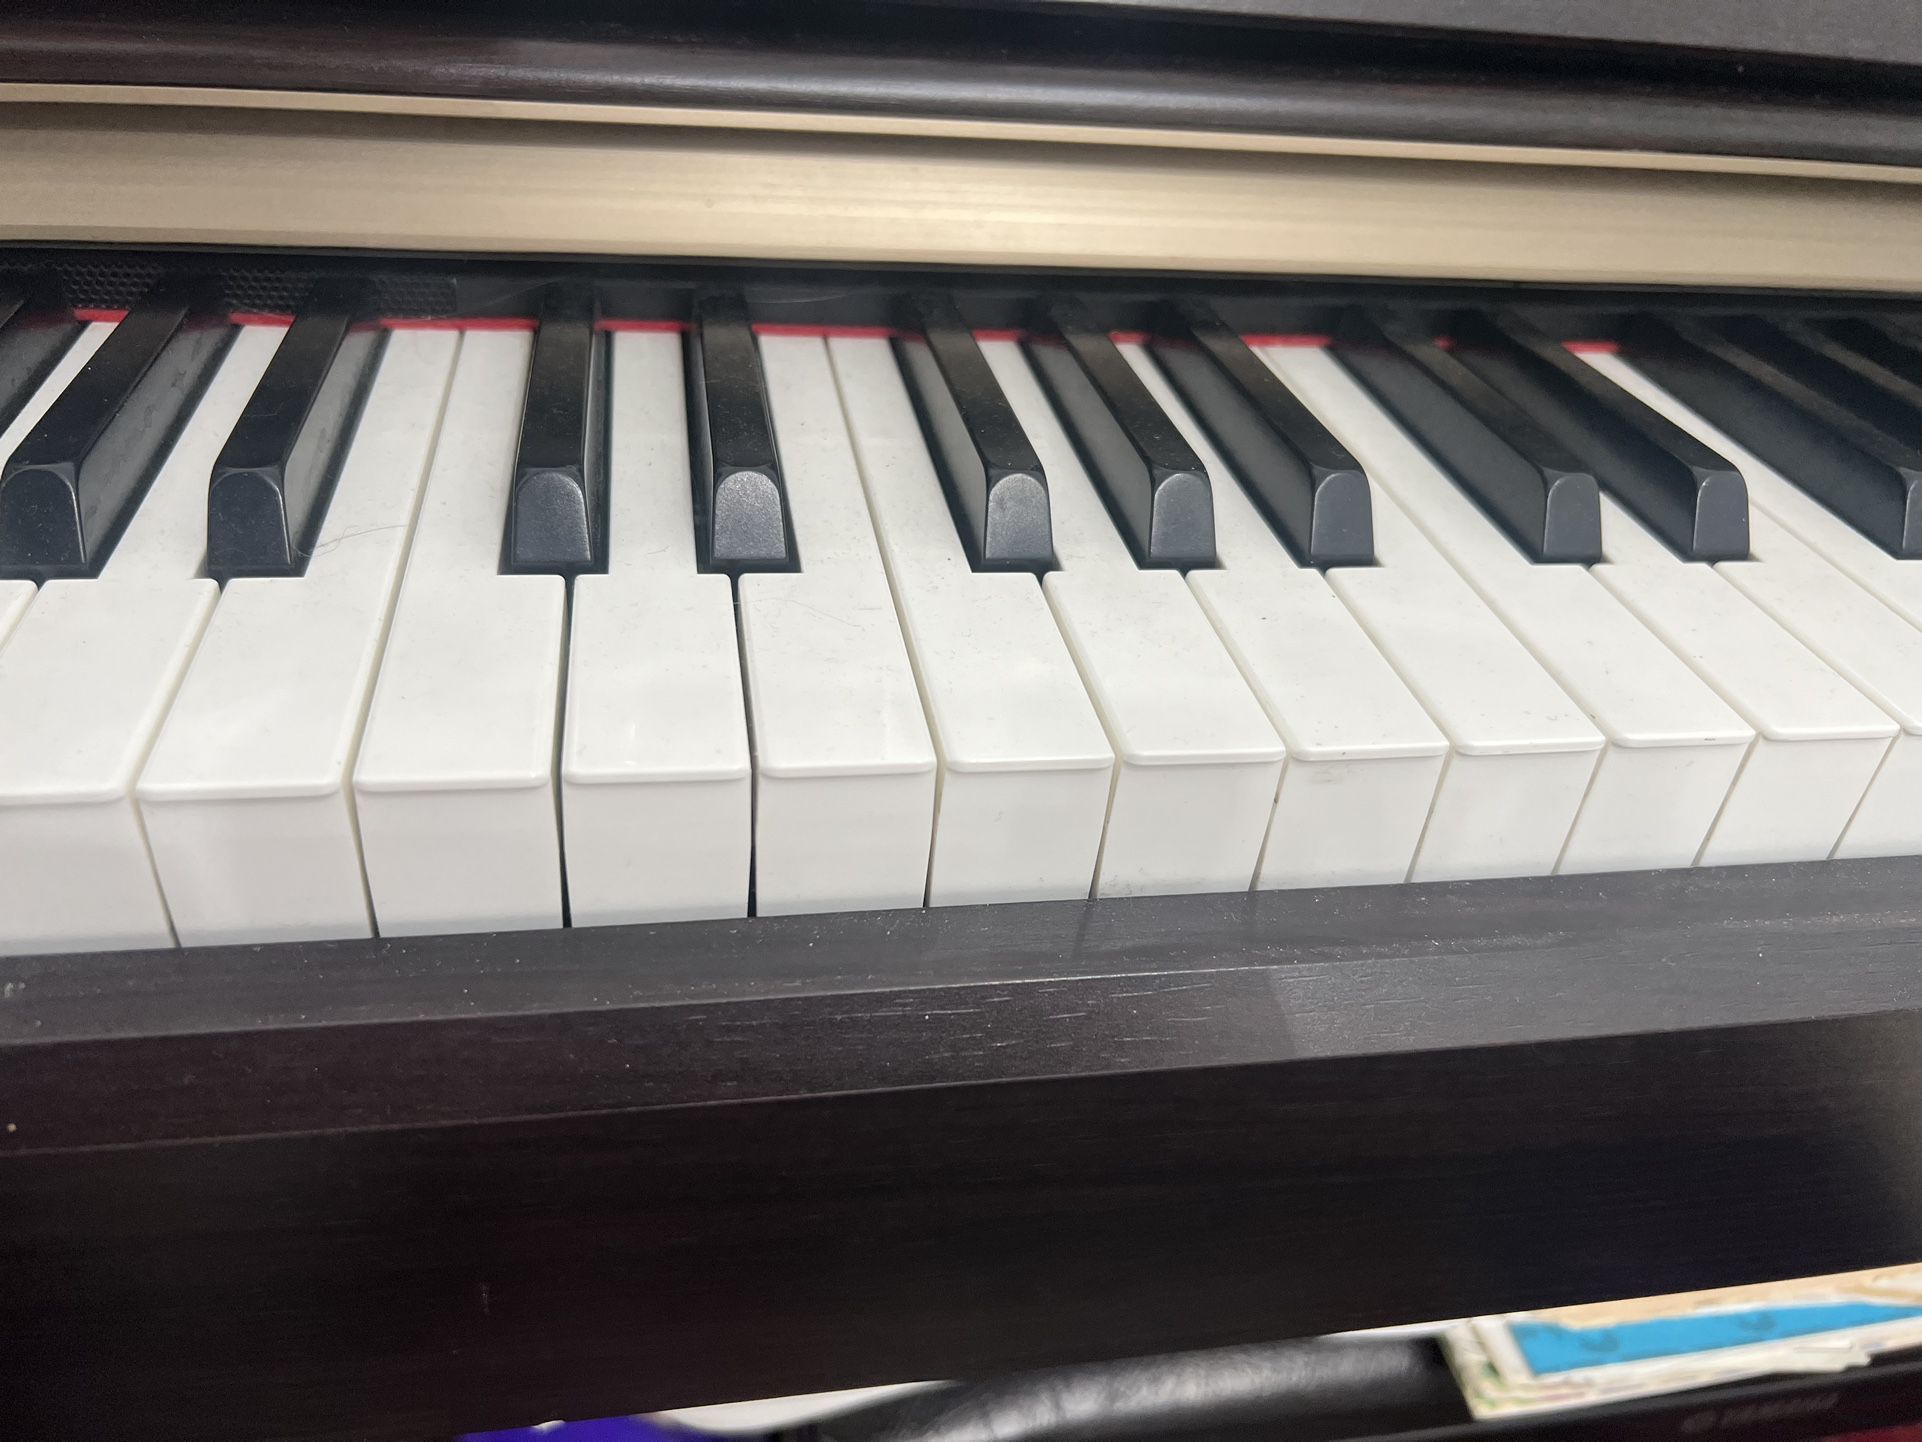 Yamaha Piano - Great condition 